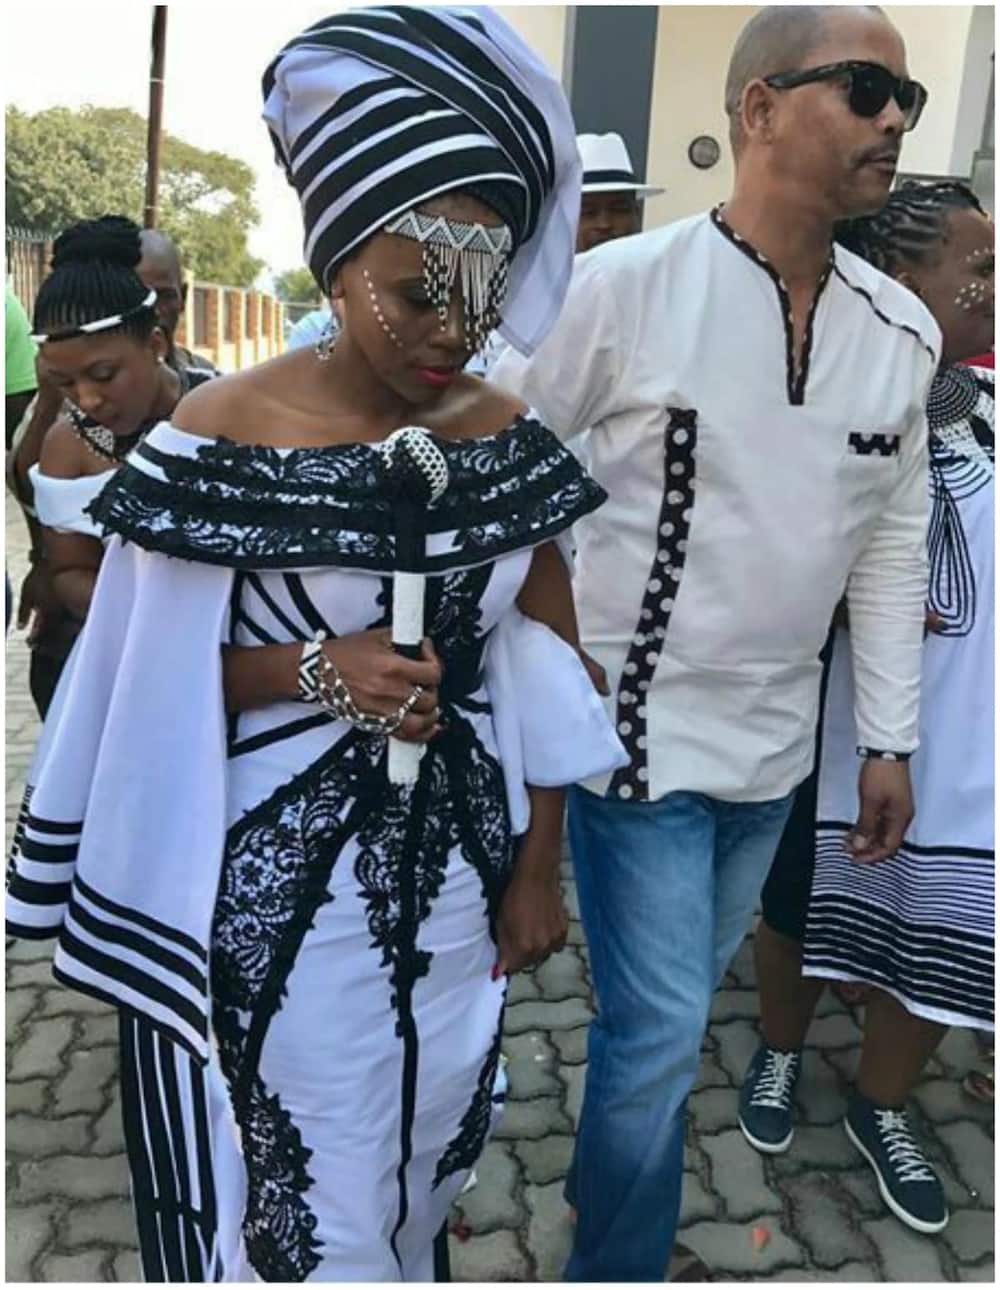 Xhosa traditional wedding attire
Xhosa traditional attire for wedding
Xhosa traditional wedding attire for bride and groom